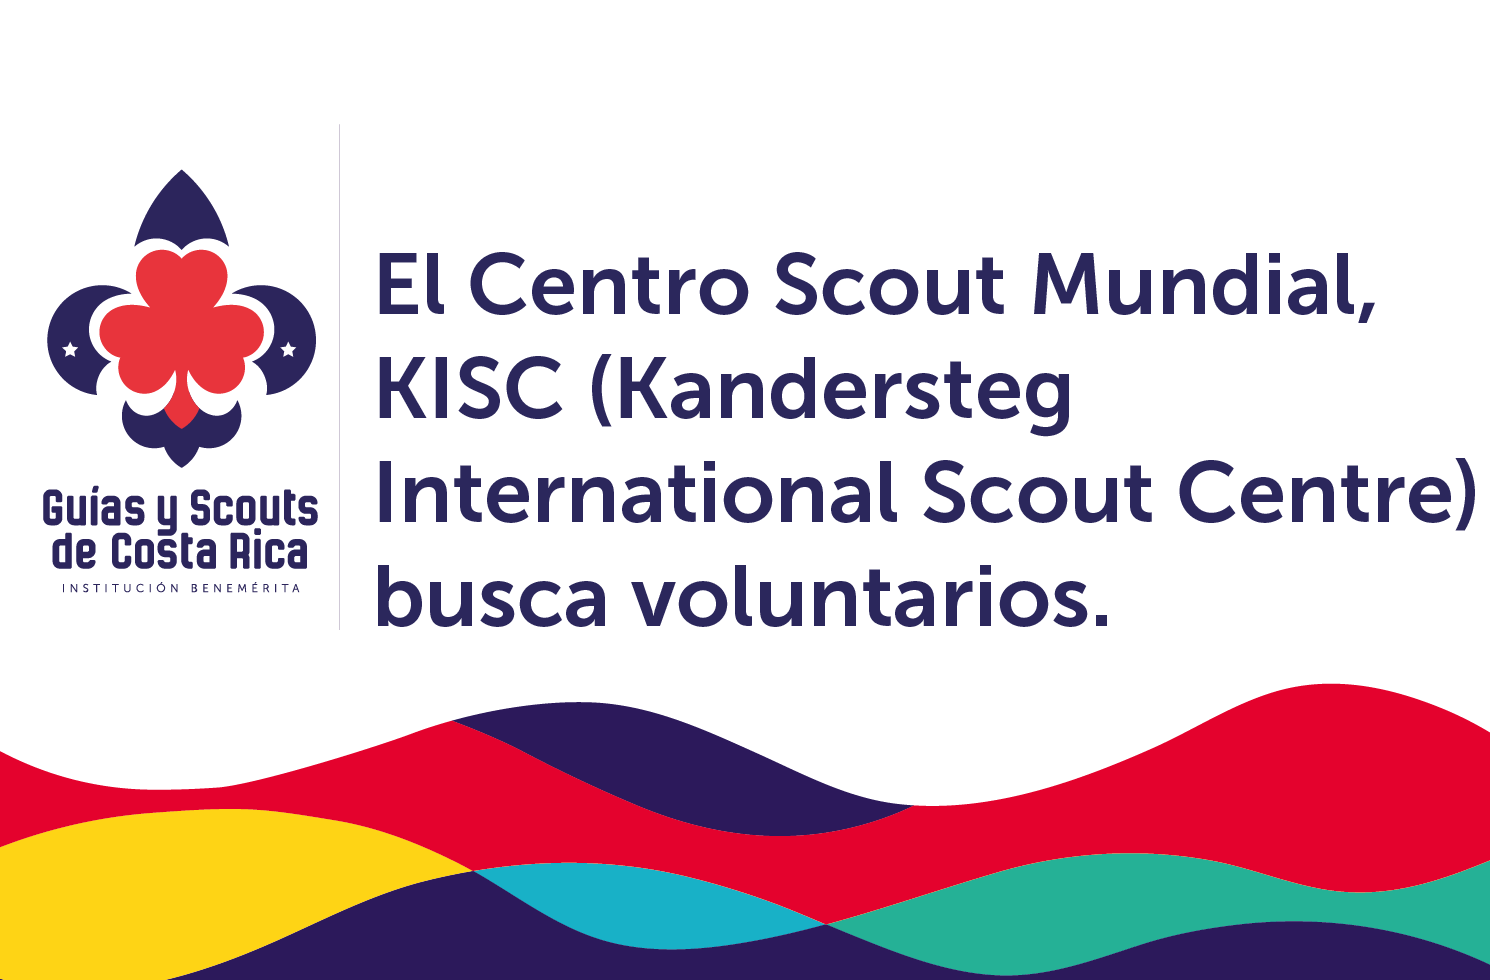 El Centro Scout Mundial, KISC (Kandersteg International Scout Centre) busca voluntarios.